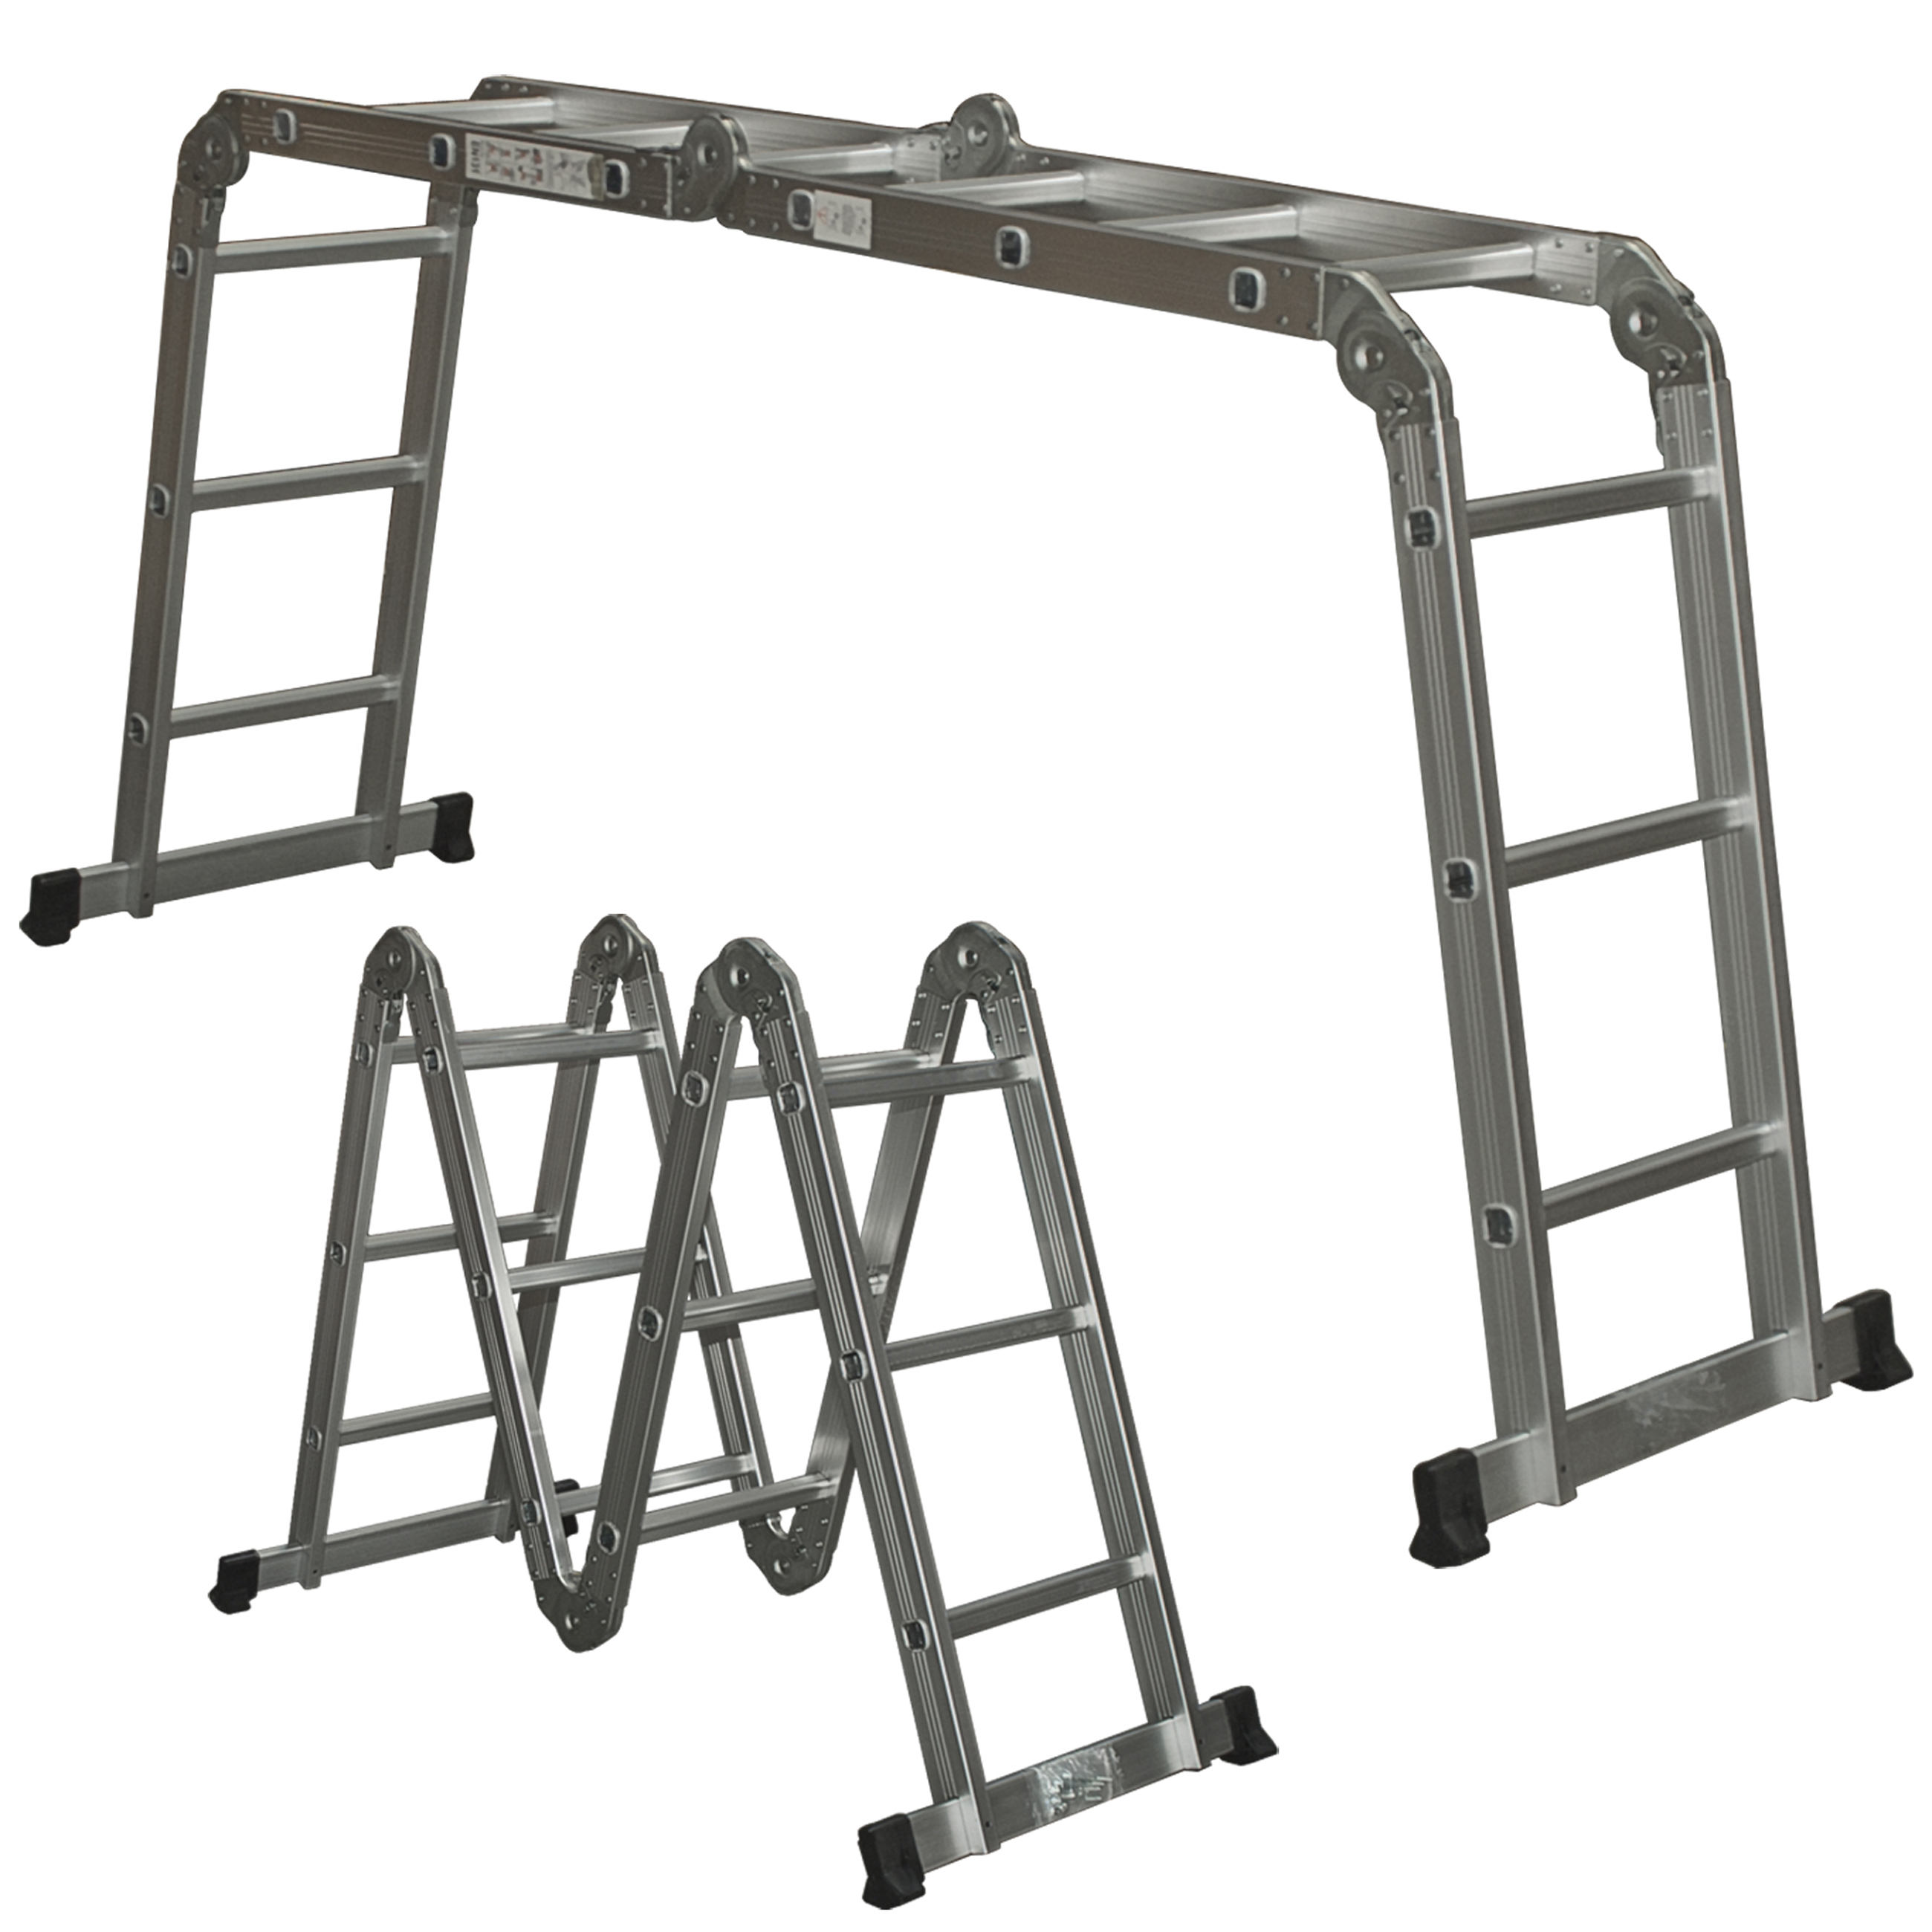 11-foot multi-purpose aluminum folding extendable step ladder for $65